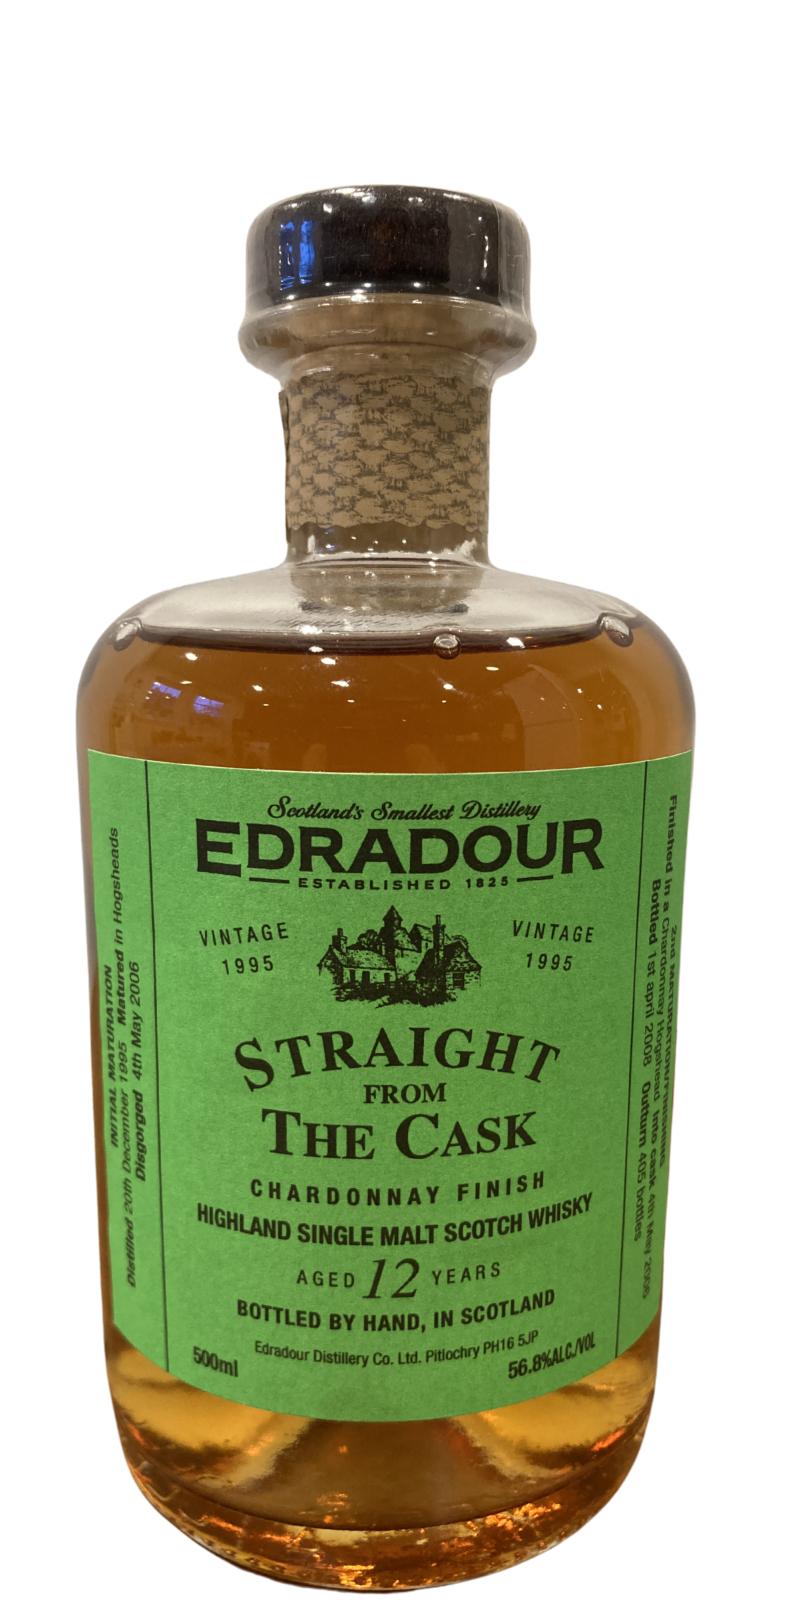 Edradour 1995 Straight From The Cask Chardonnay Finish Chardonnay Finish 56.8% 500ml